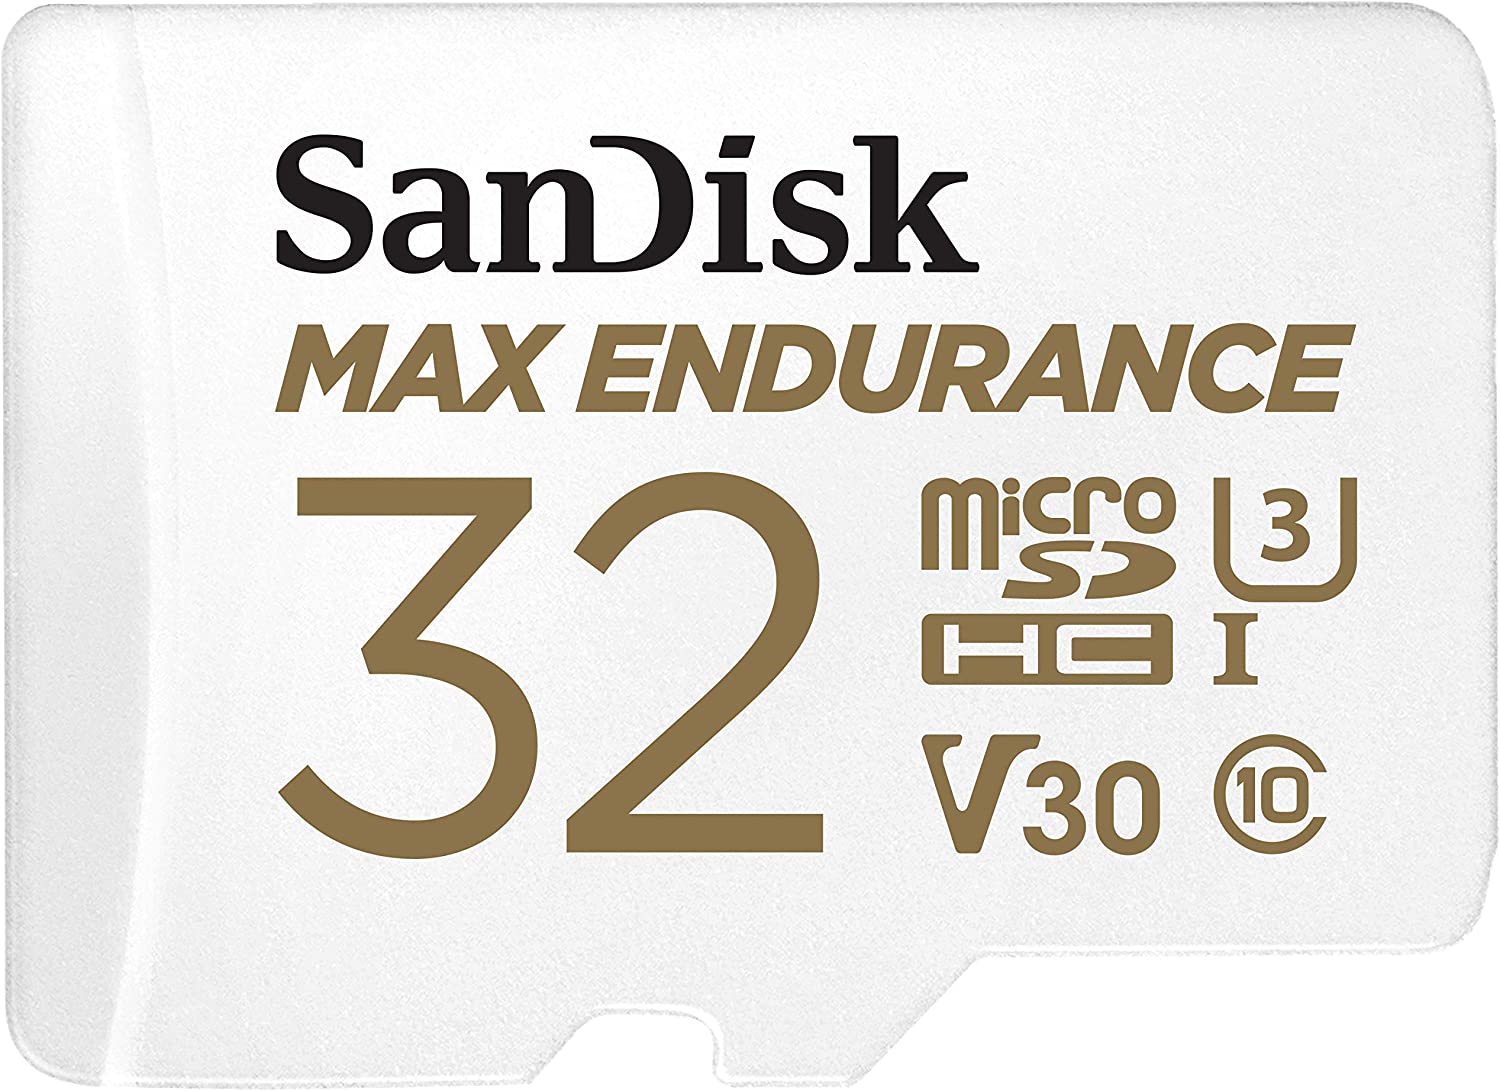 Sandisk Max Endurance microsd class 10 32 GB Memory cards